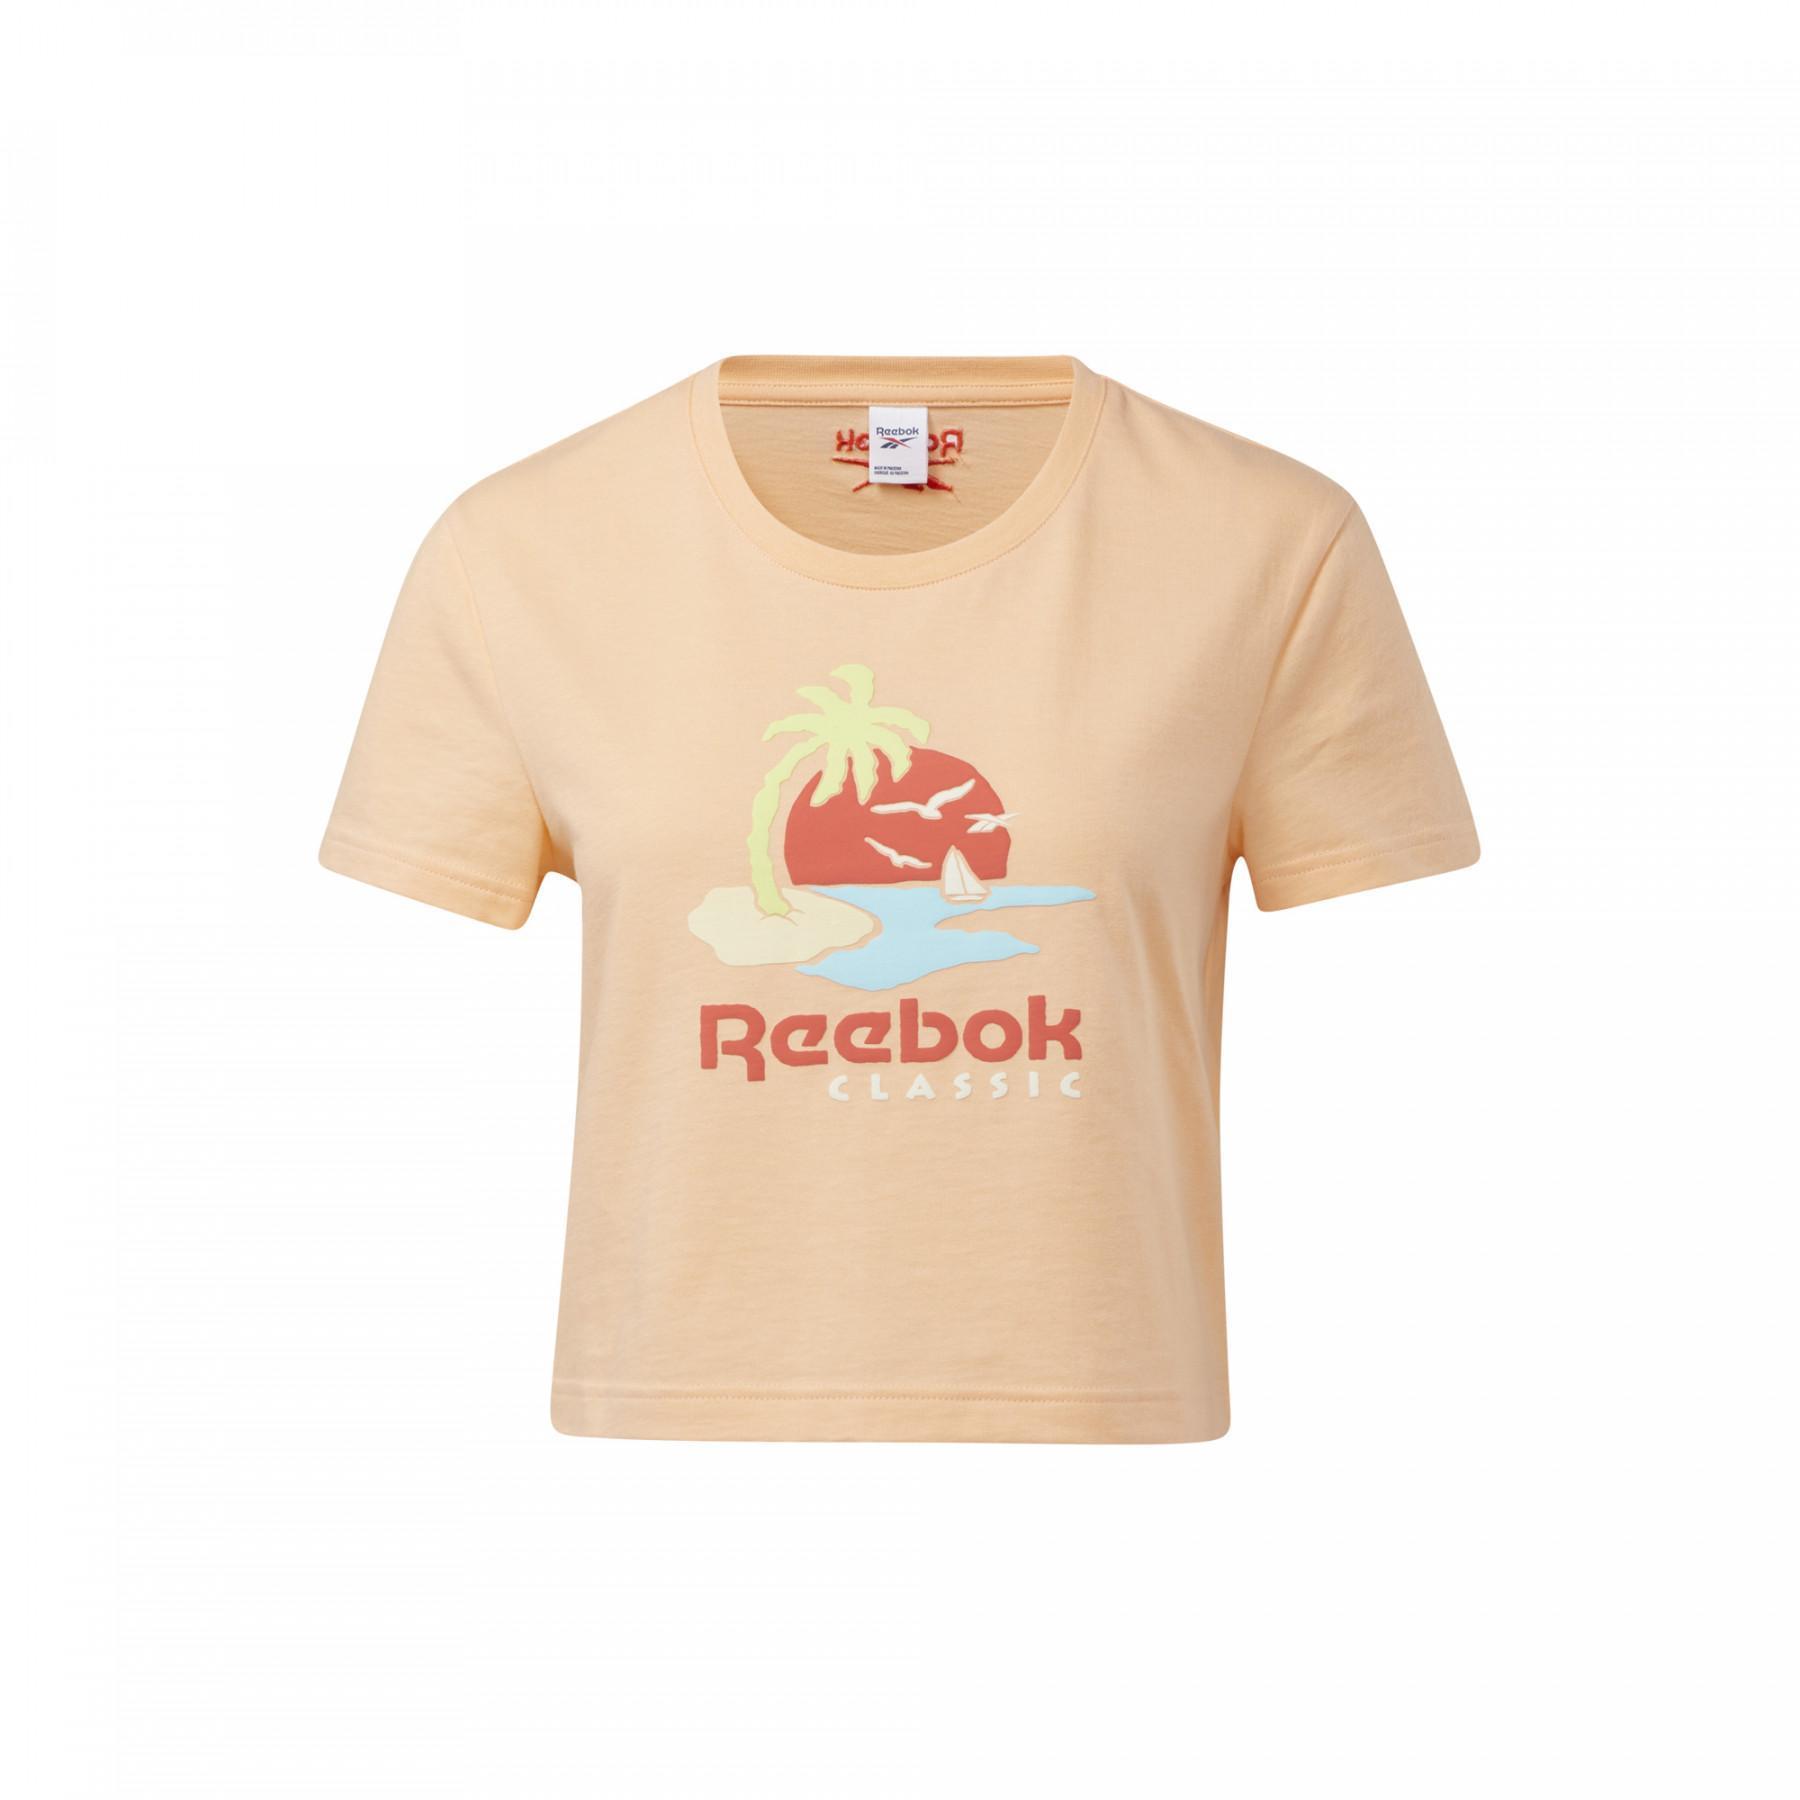 Camiseta feminina Reebok Classics